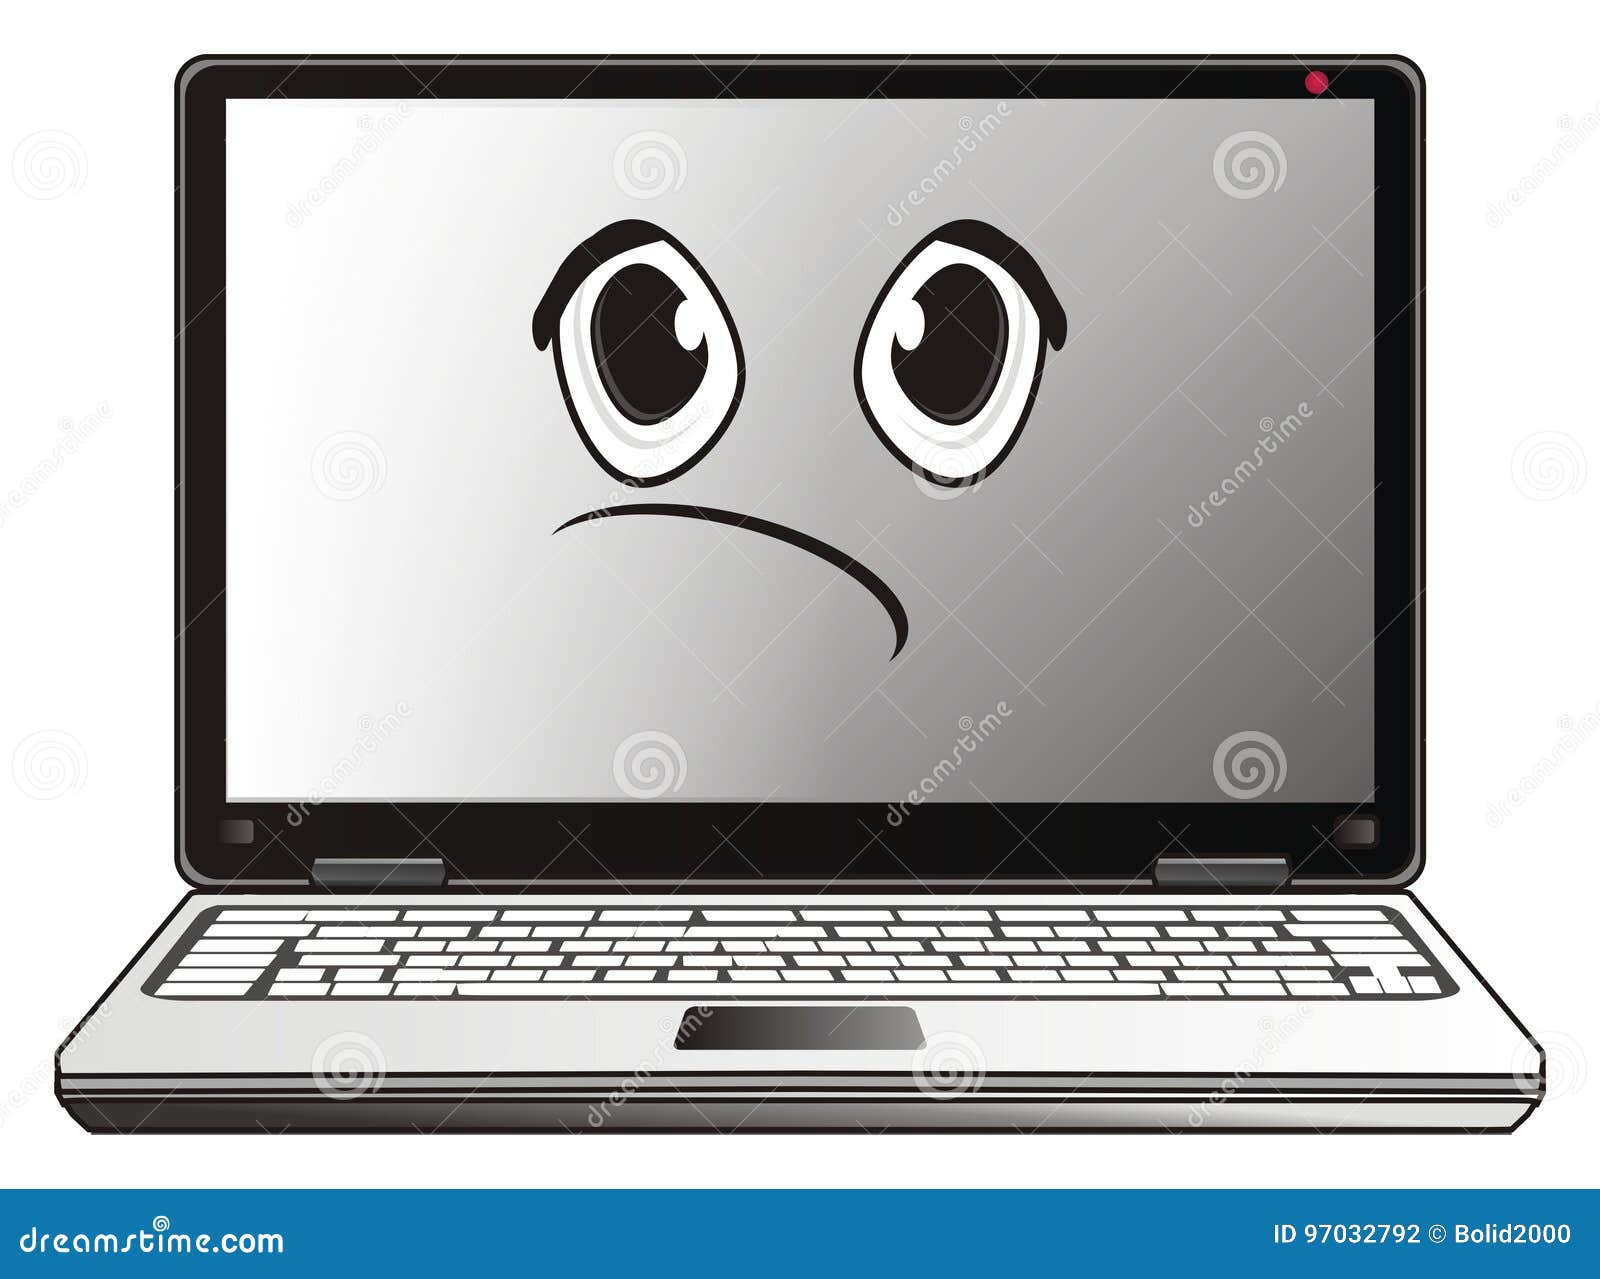 Sad face of laptop stock illustration. Illustration of design - 97032792